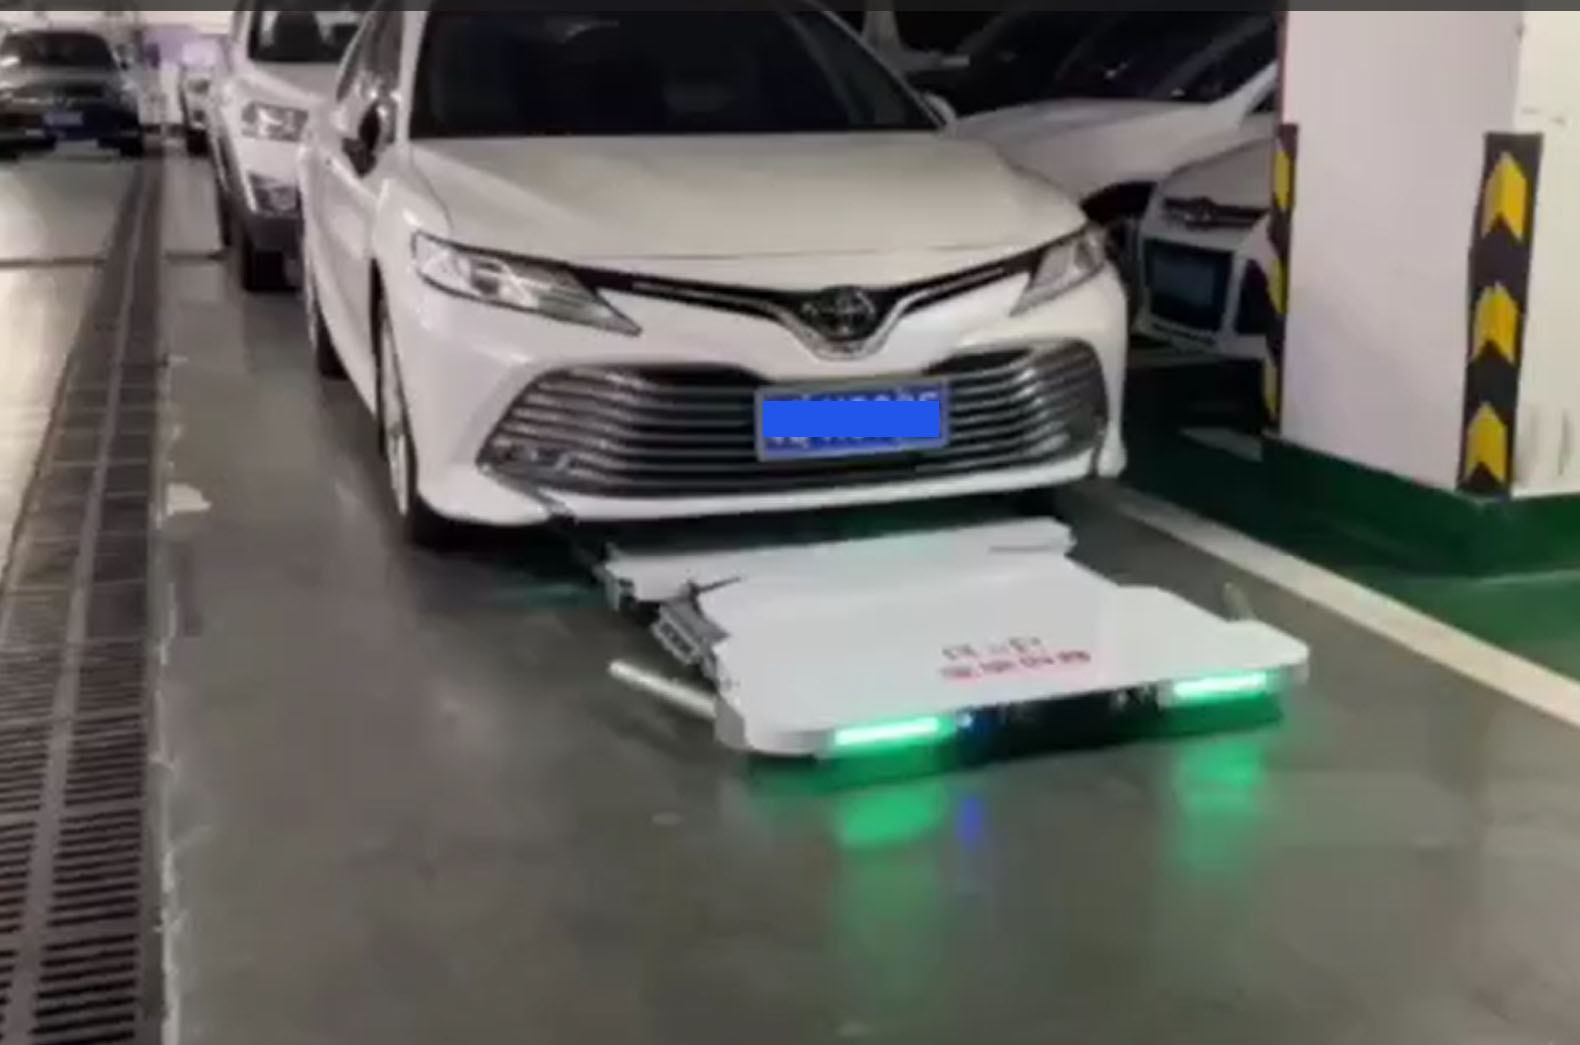 Car Moving AMR Robot